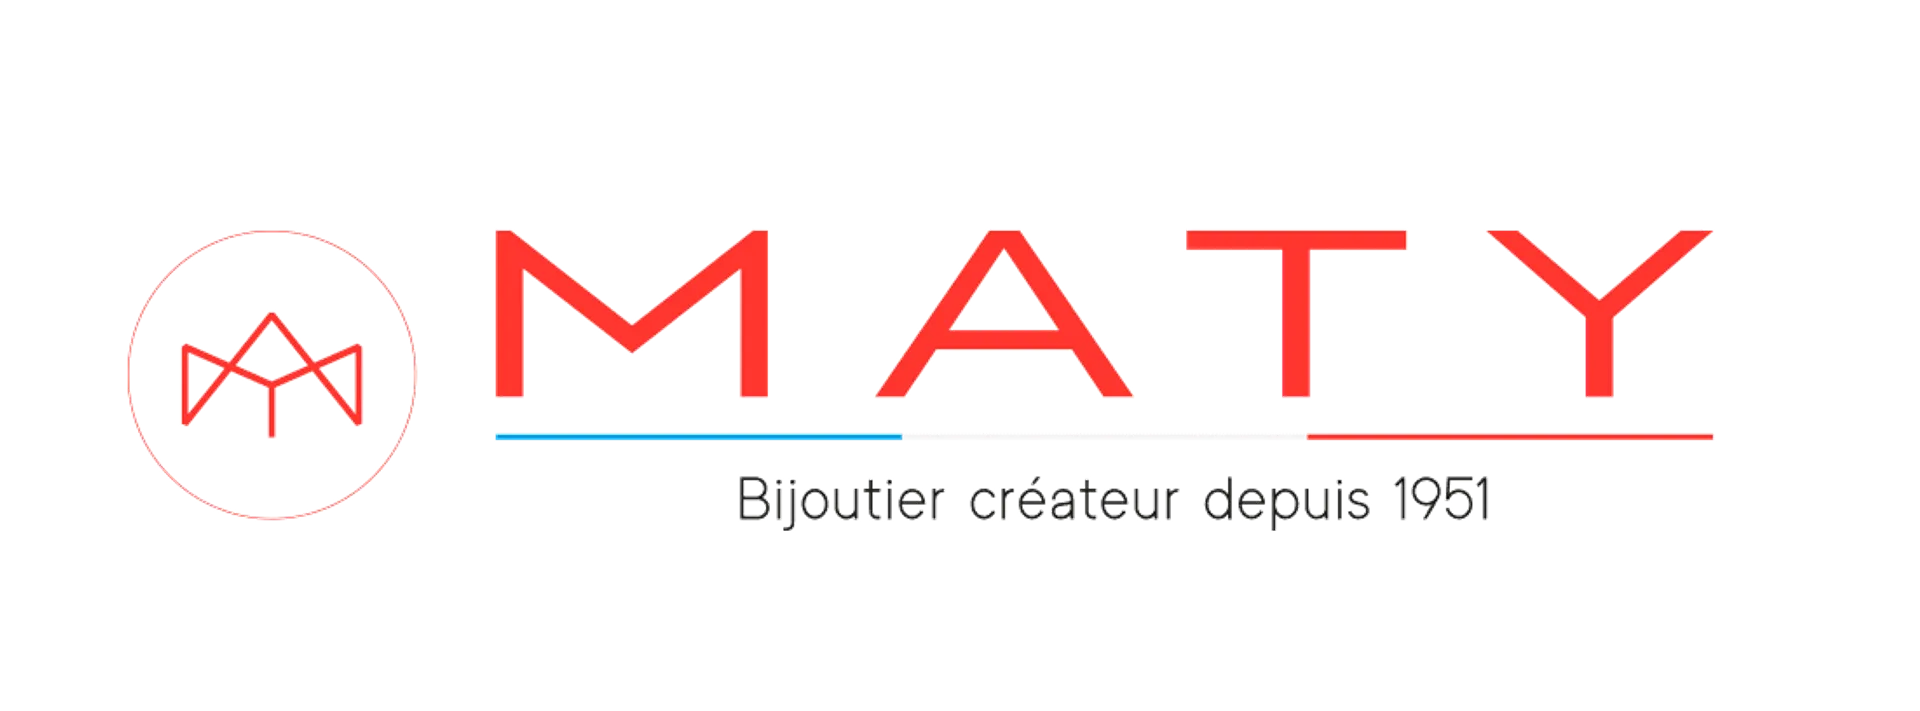 MATY logo du catalogue